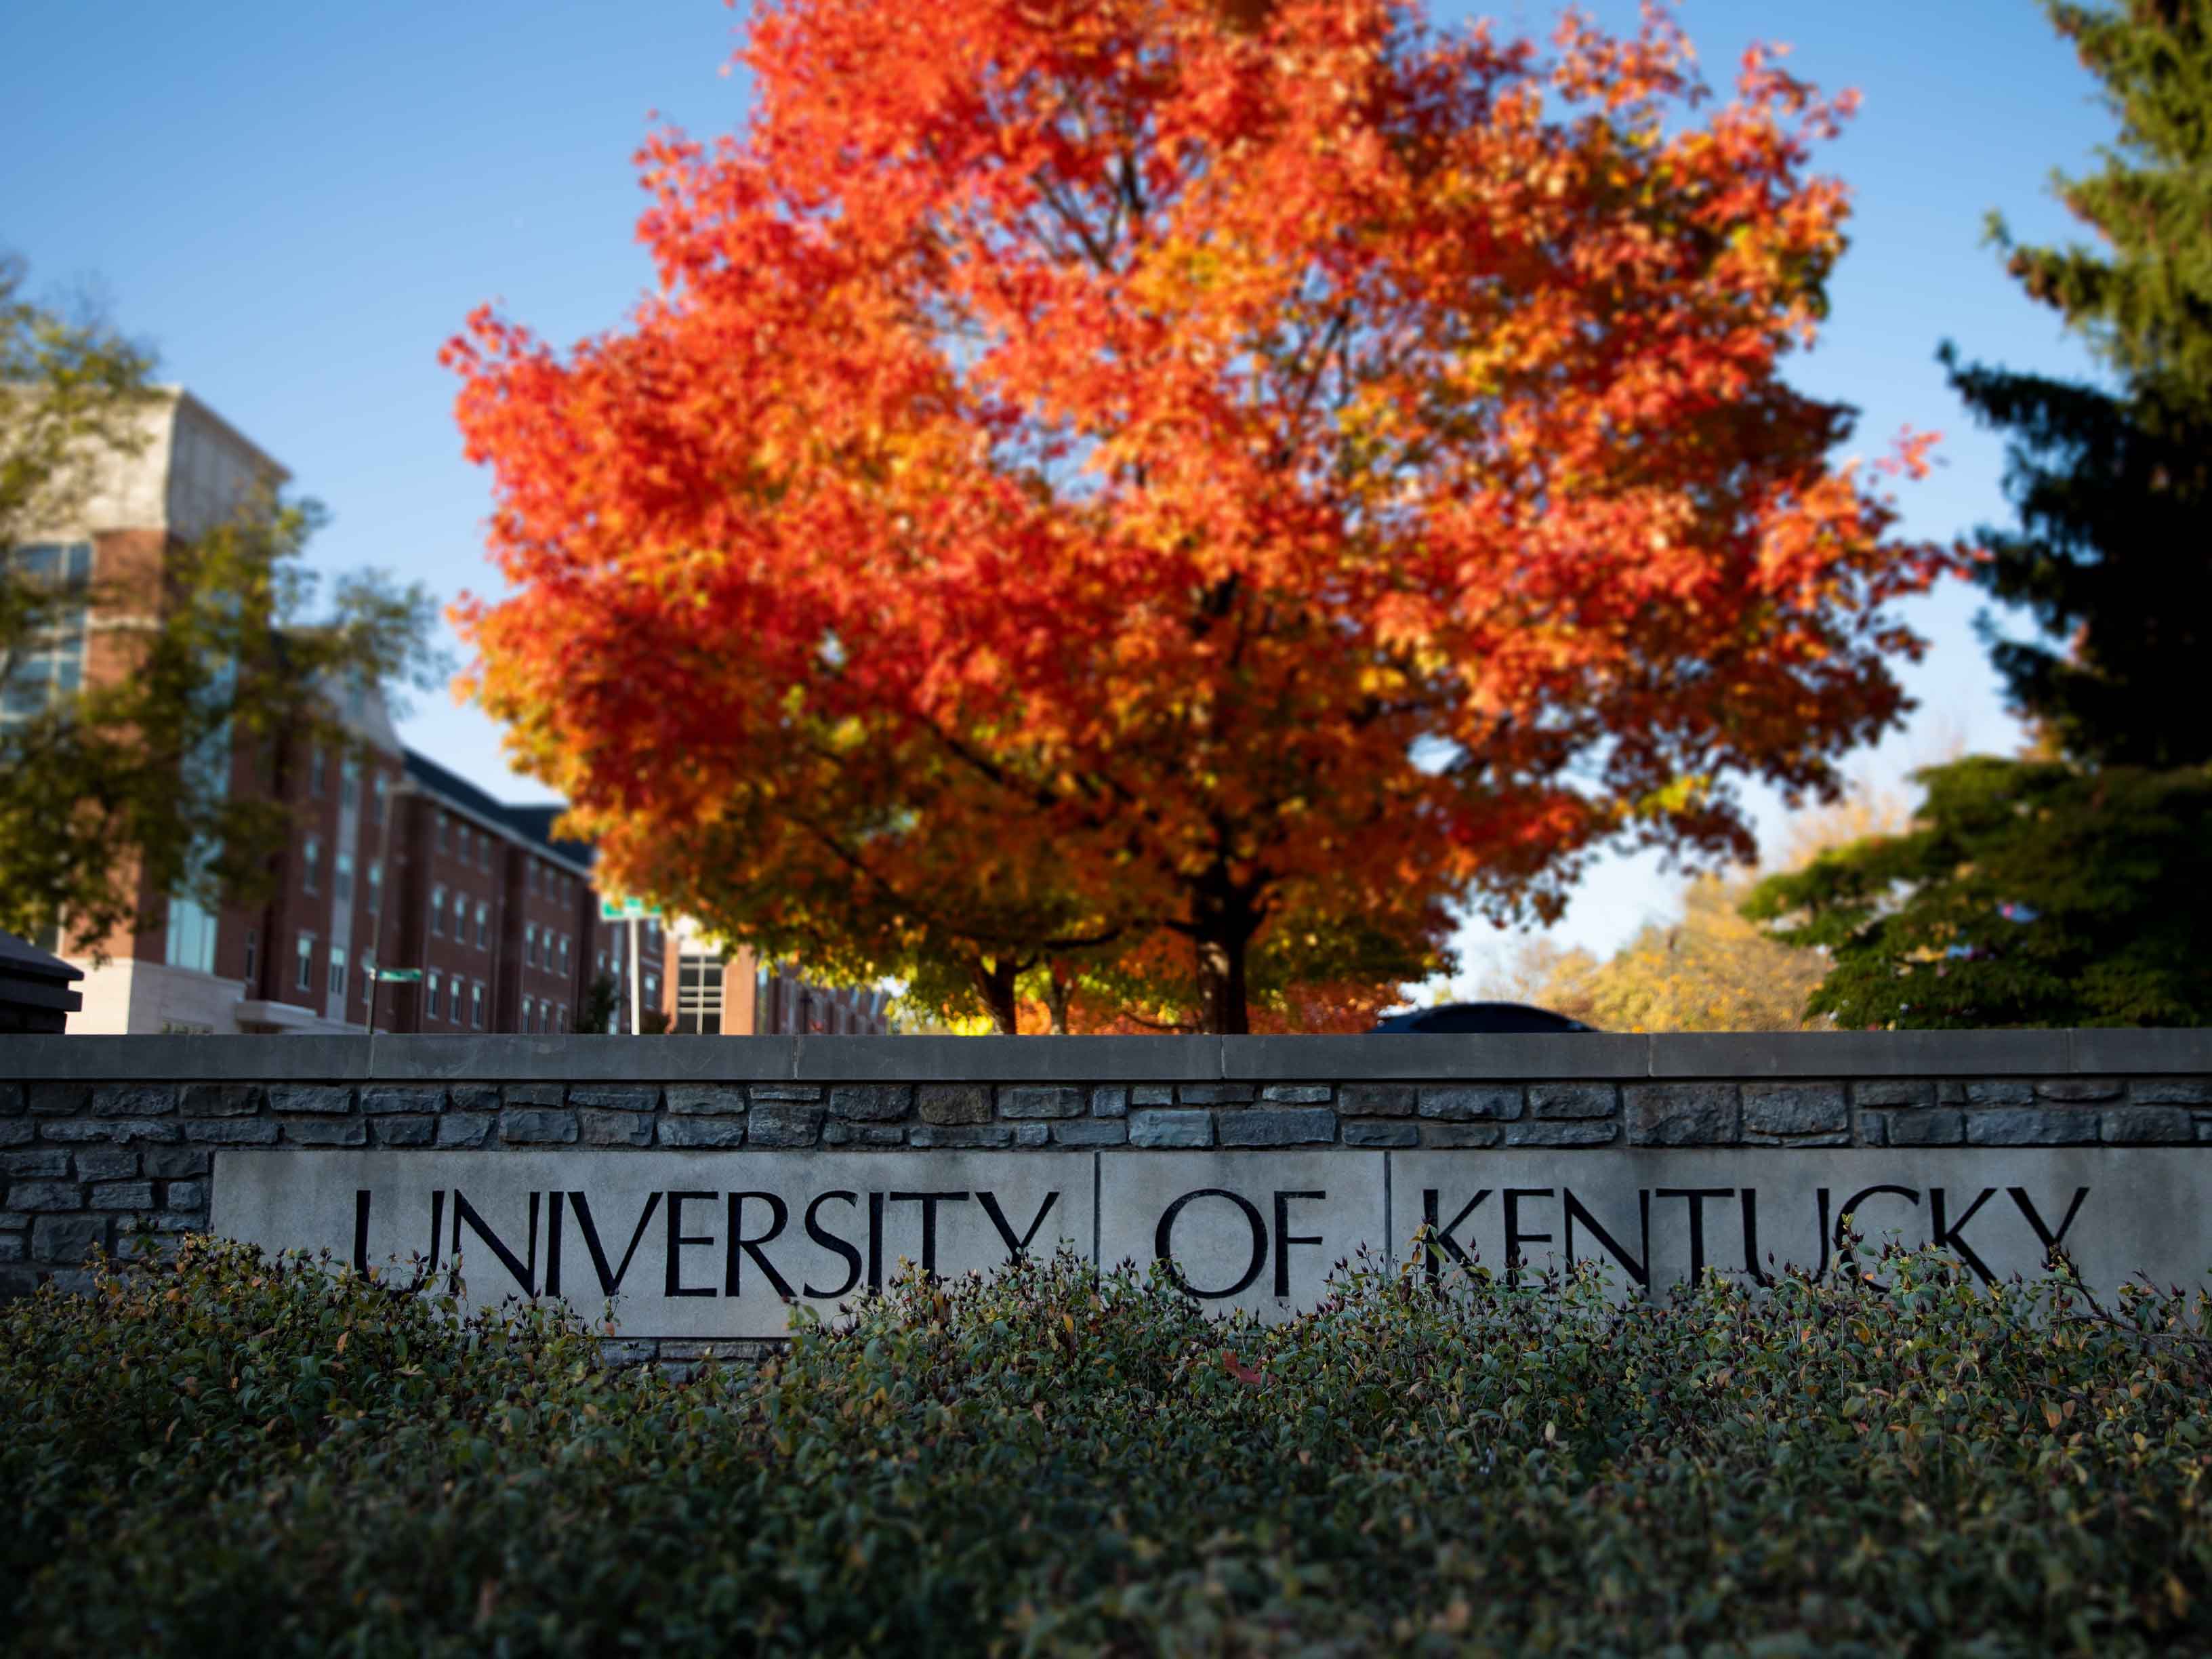 University of Kentucky sign